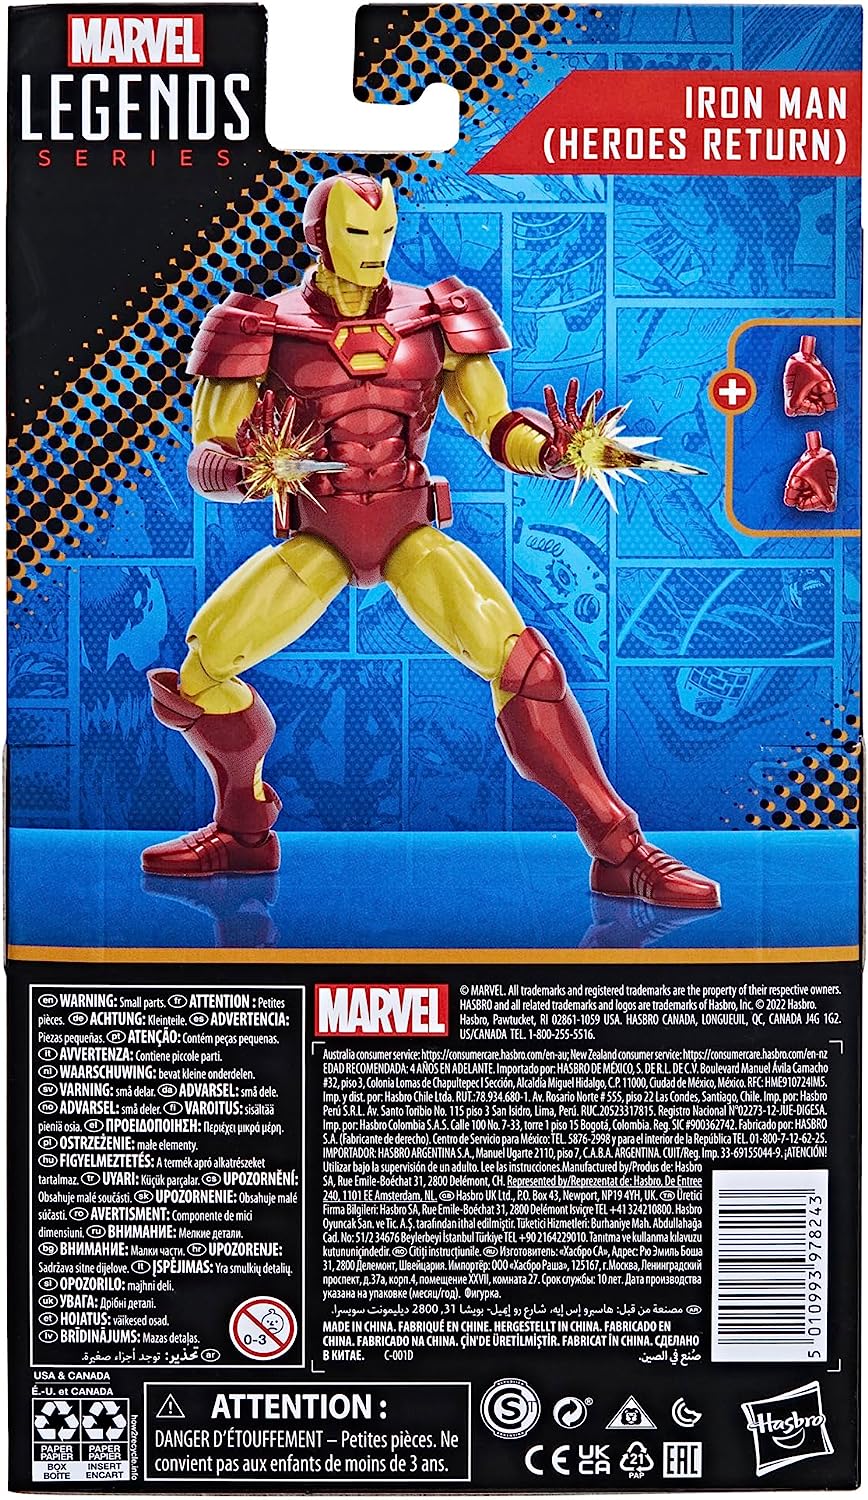 Iron Man (Heroes Return) - Captain Marvel Legends 6in Action Figure (Awesome Hulk BAF)